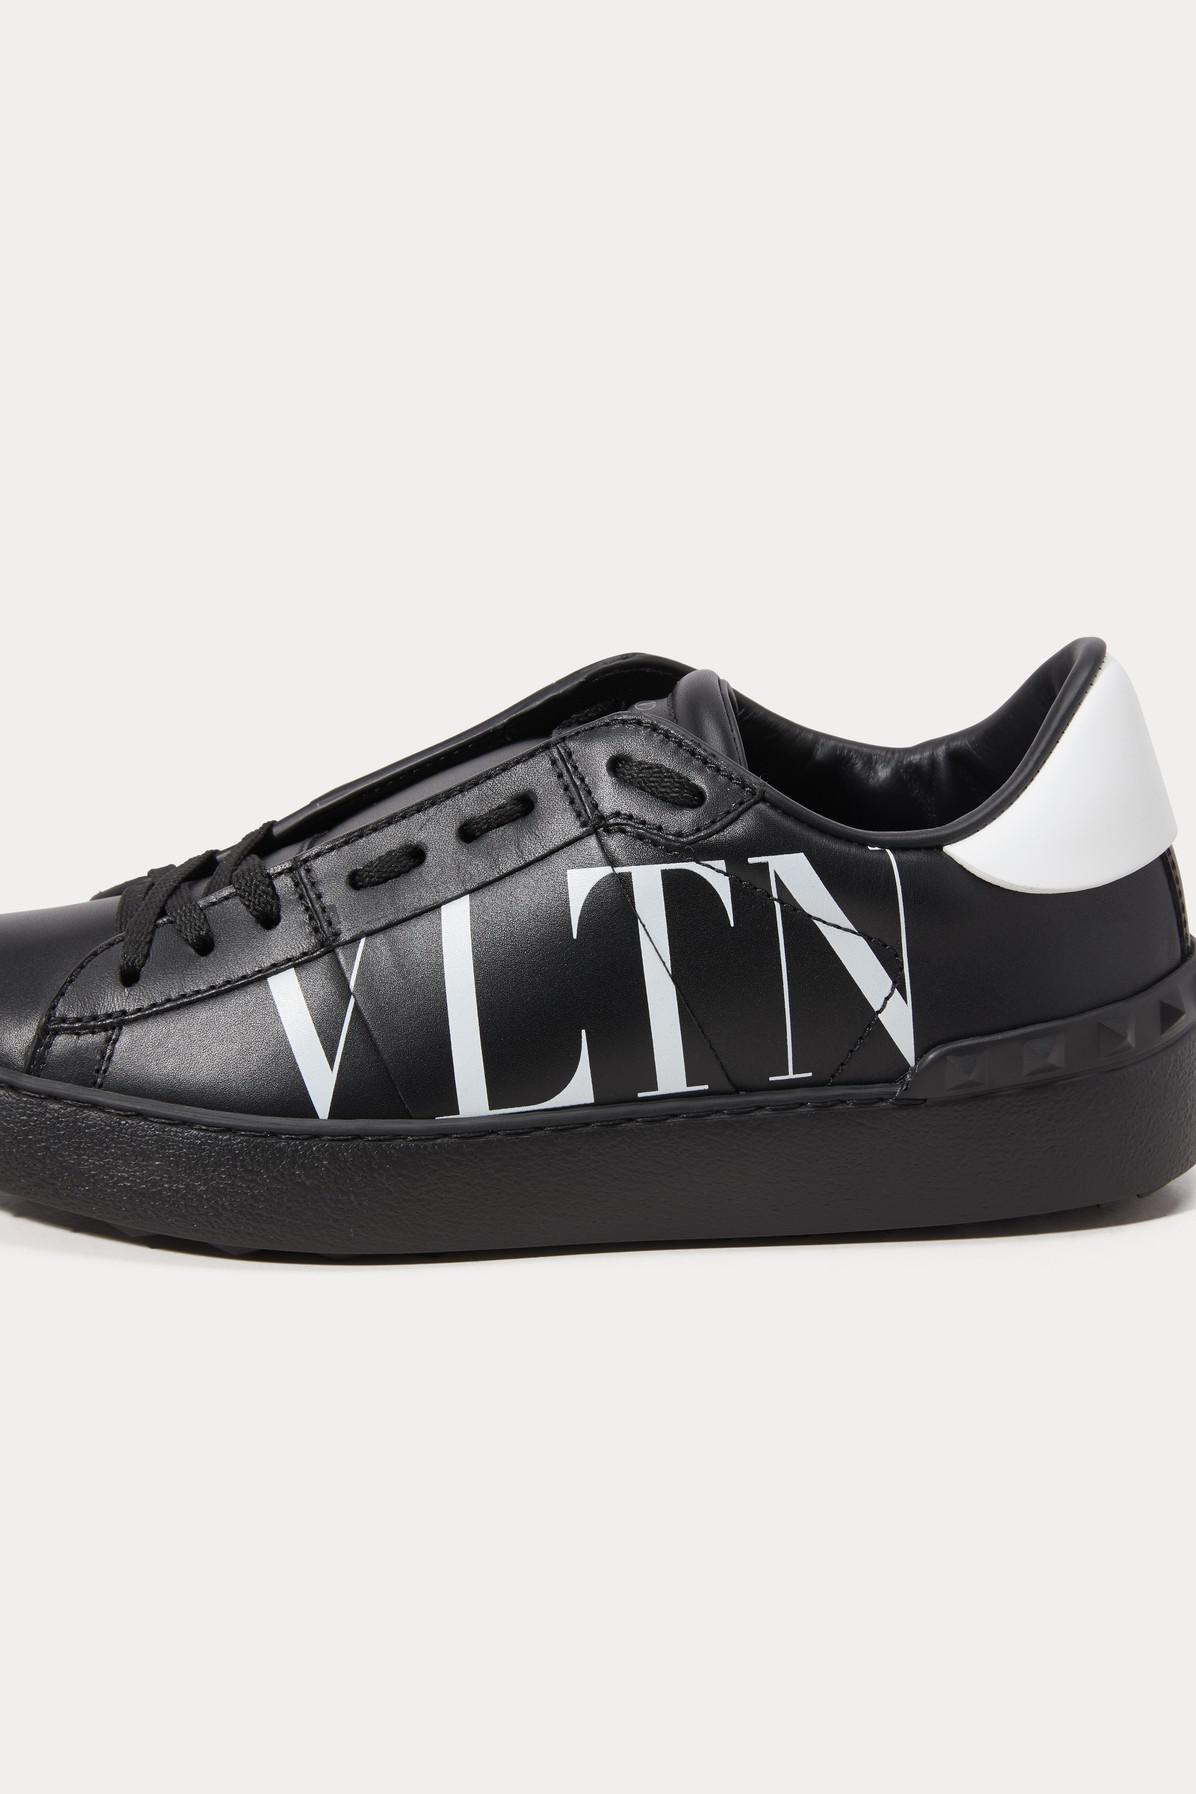 Lyst - Valentino Vltn Low-top Sneakers in Black